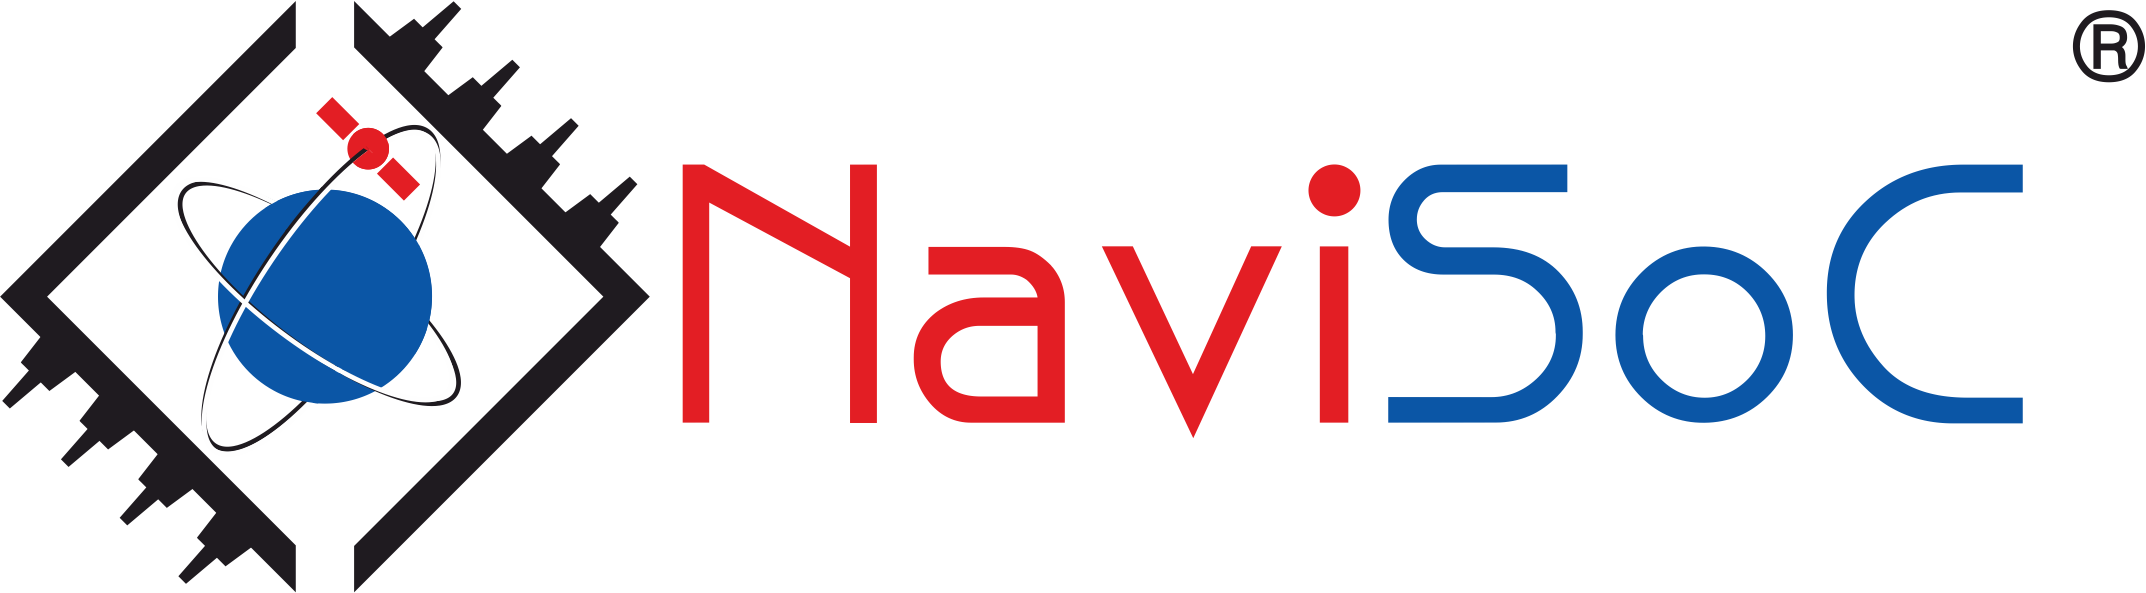 Navi So C Logo Design PNG